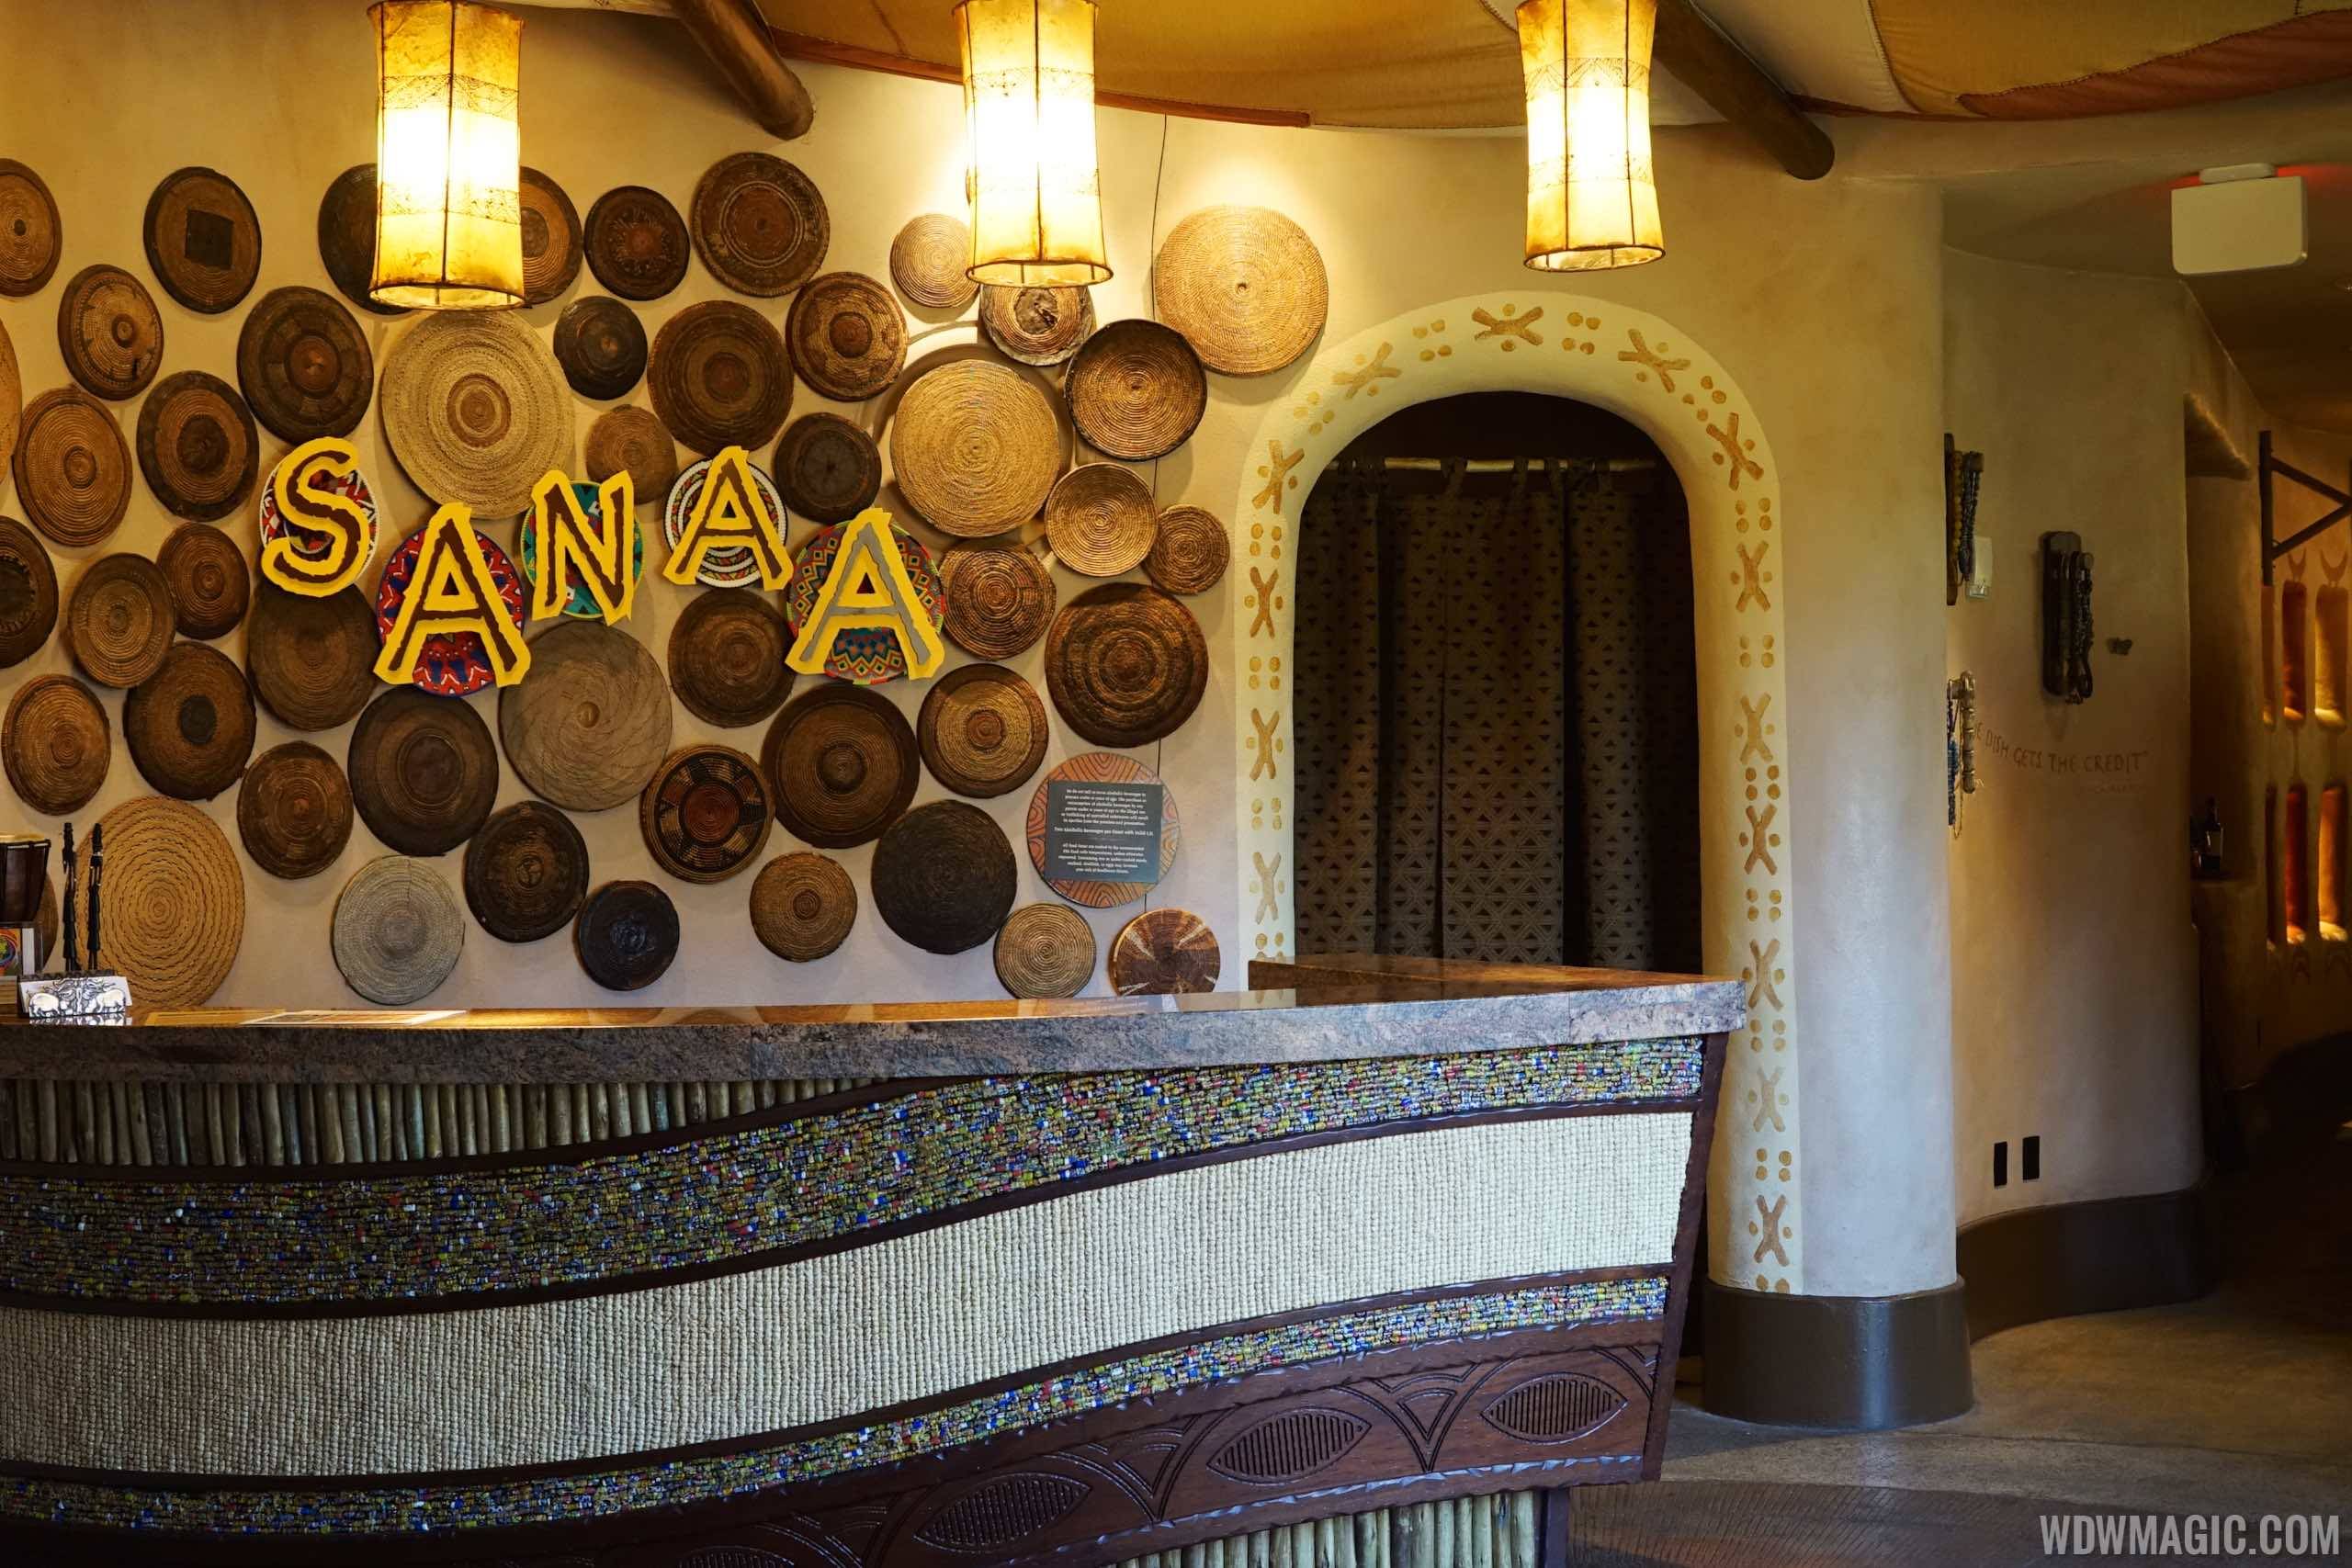 Disney Press Release - Sanaa Brings Flavors of India, Africa To Disney’s Animal Kingdom Lodge